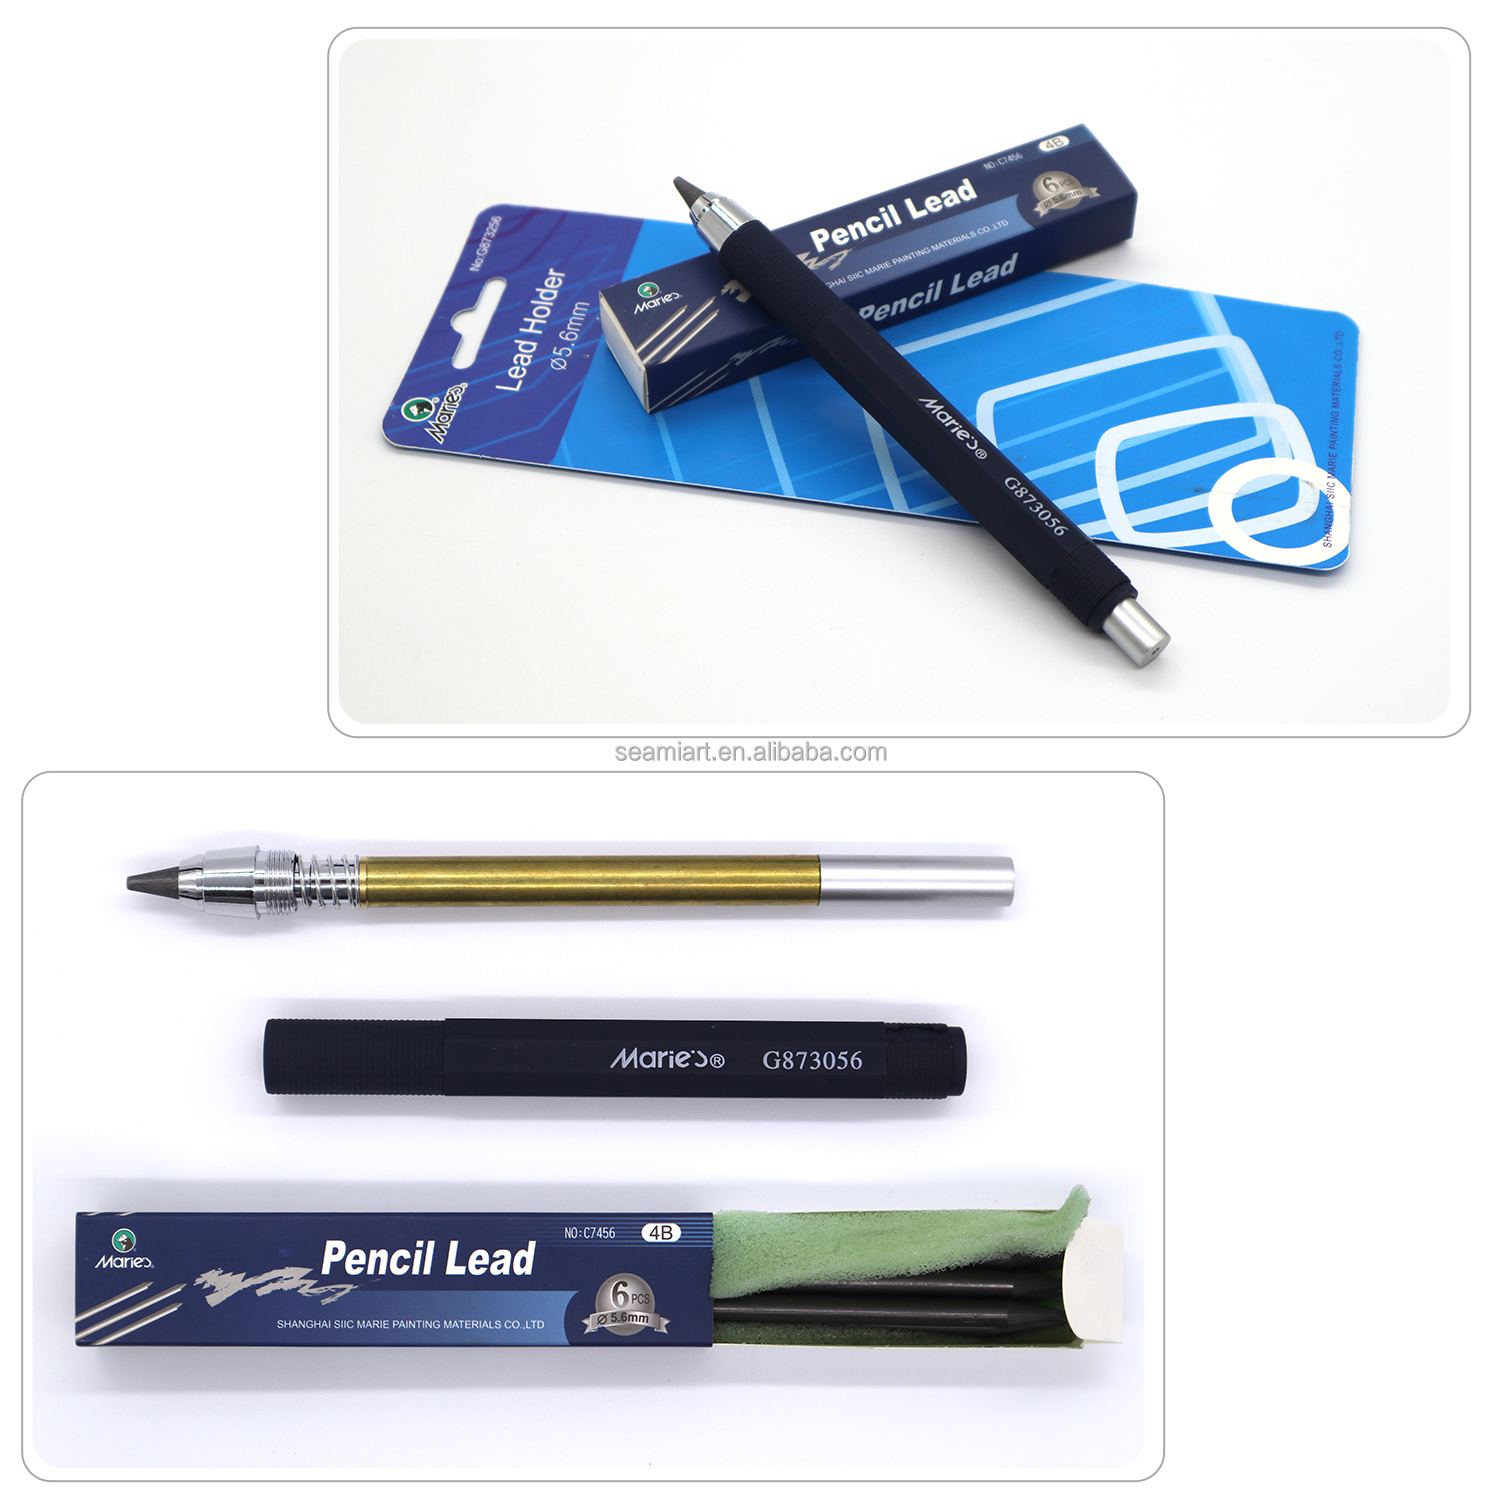 1pc 5.6mm قلم رصاص الأوتوماتيكي مجموعة 4B الرصاص لرسم القلم الرصاص الميكانيكي رسم القلم الرصاص فنان الفن الإمدادات 1